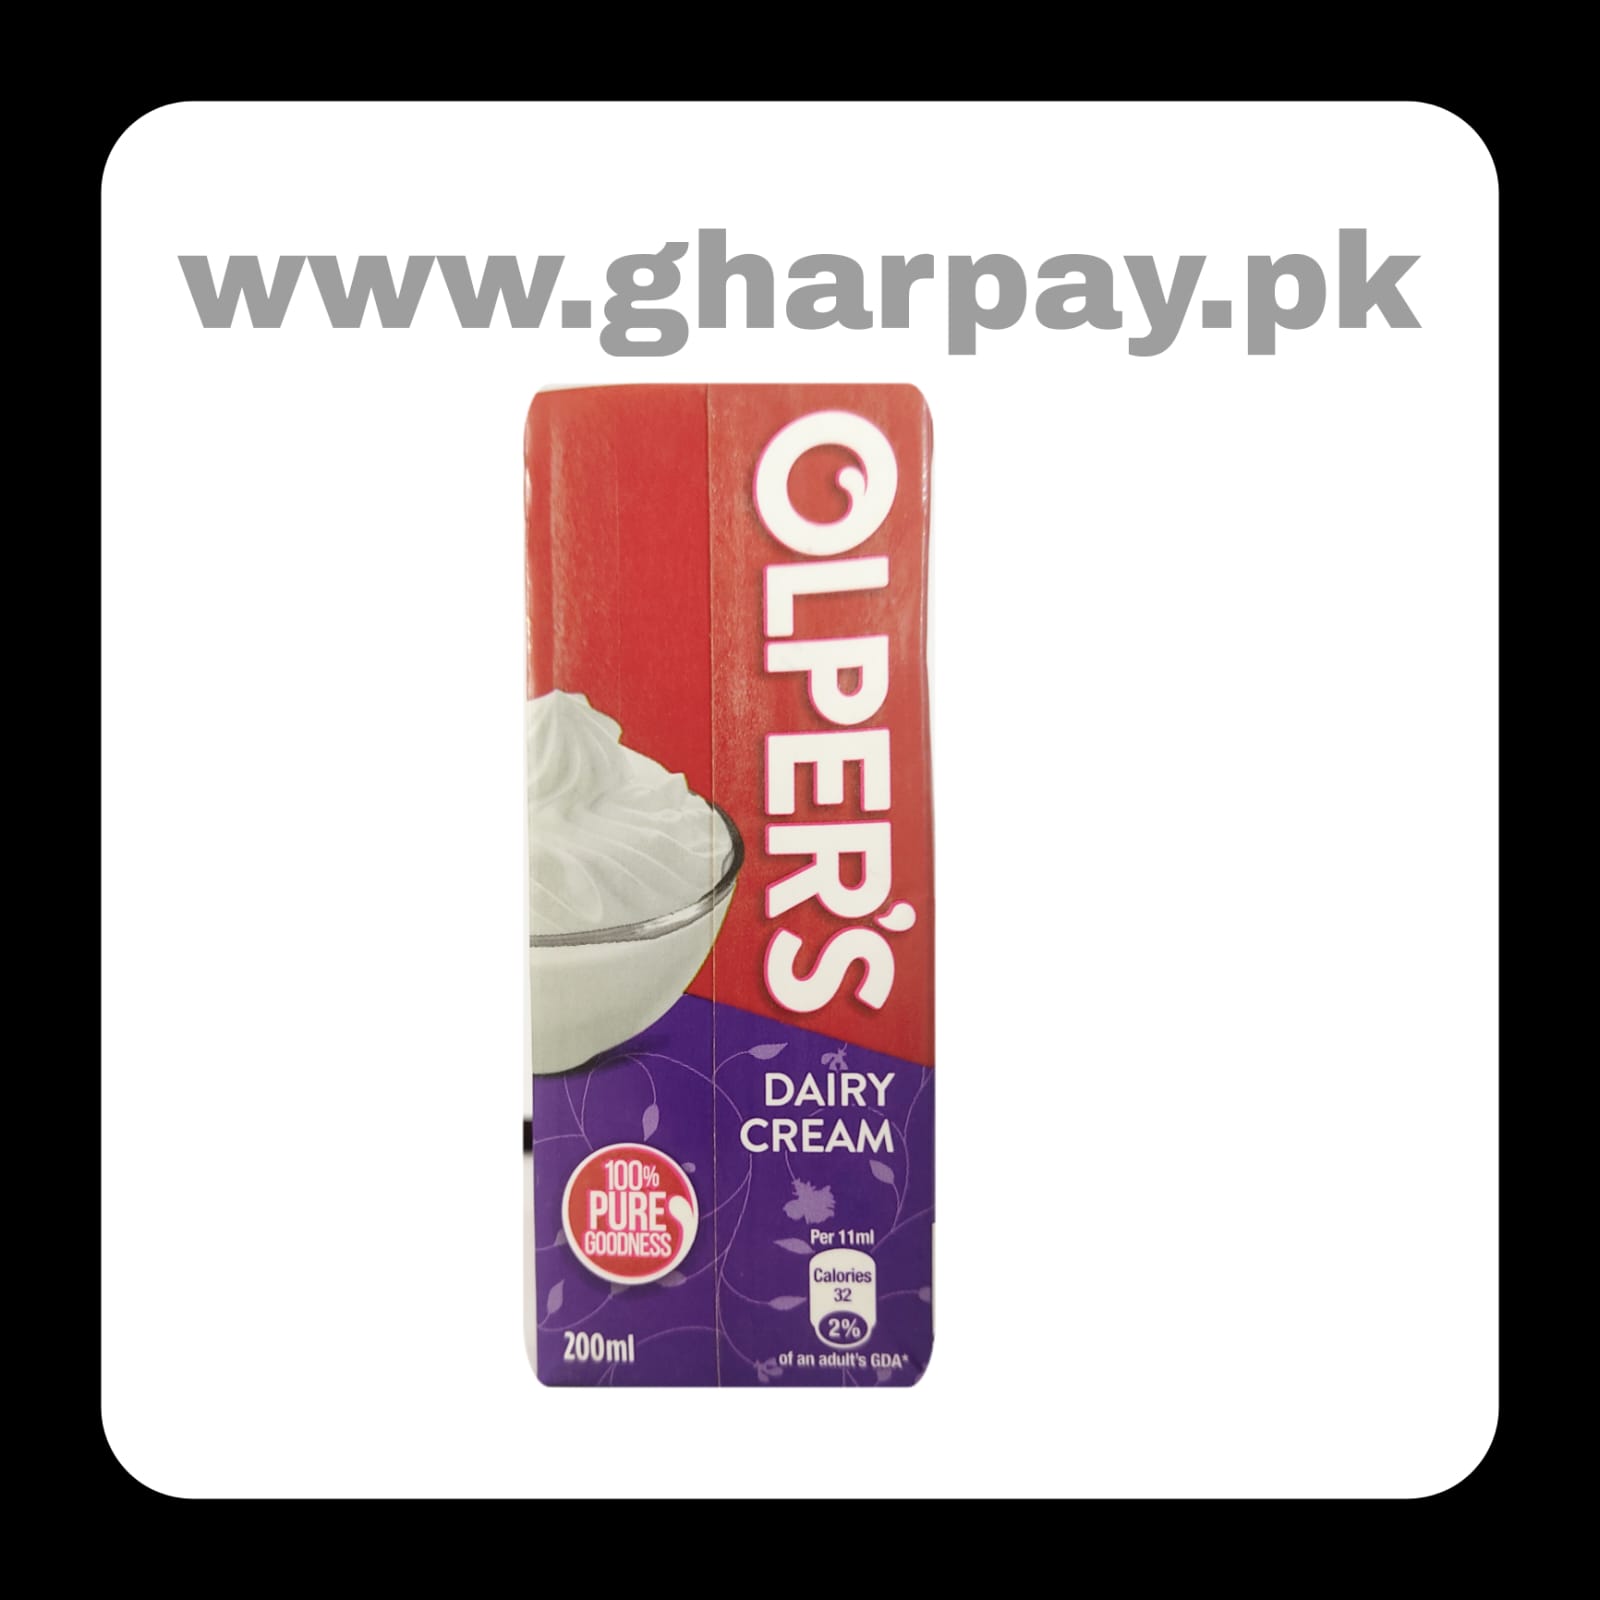 Olpers Cream